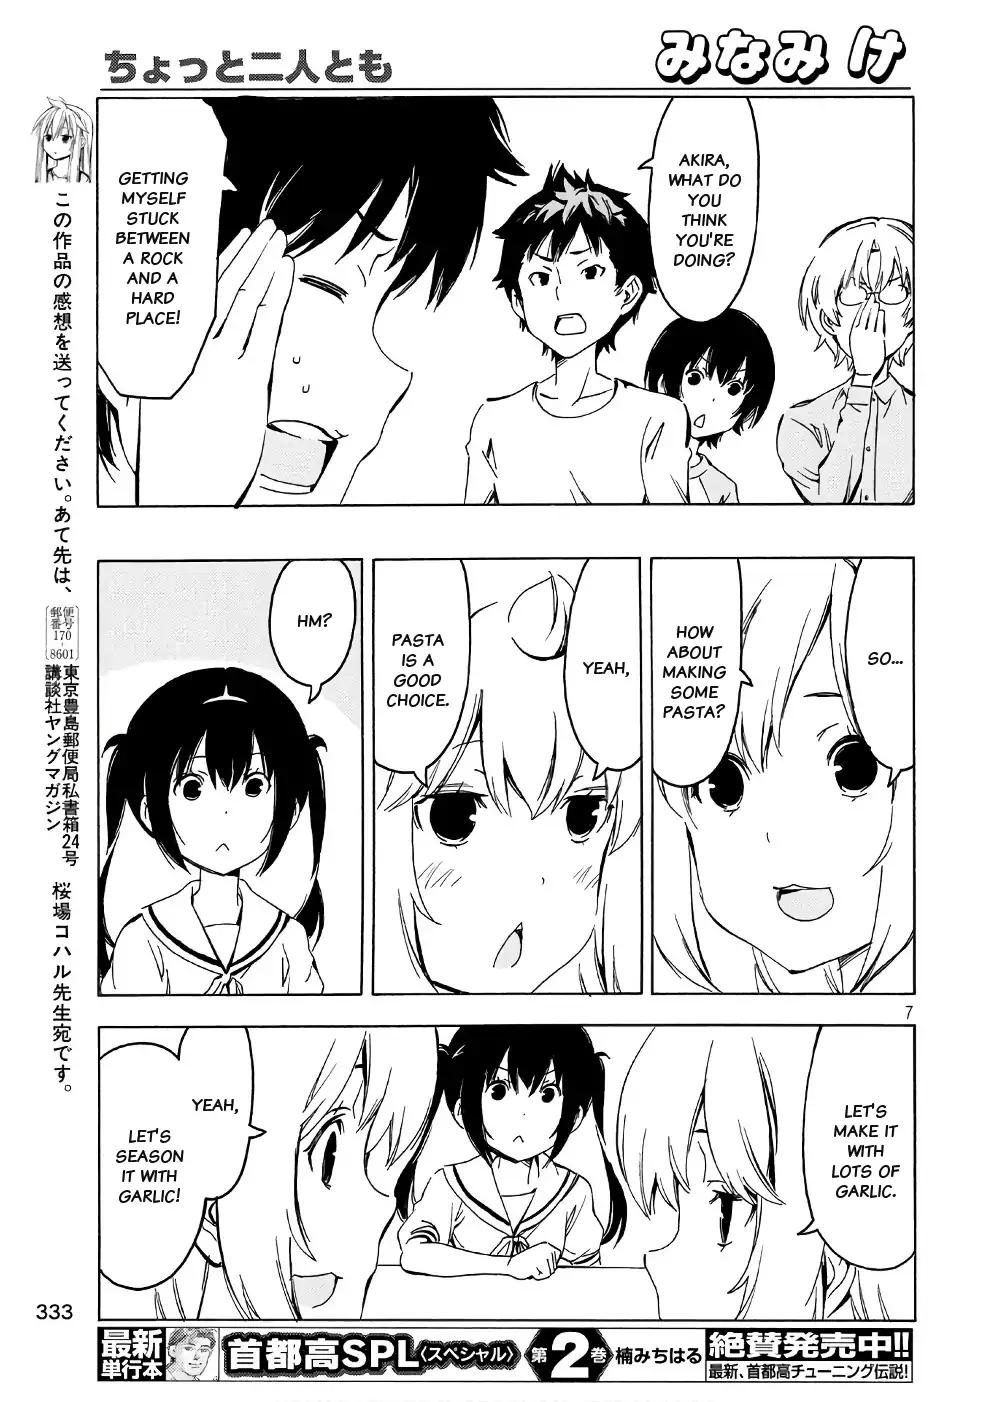 Minami-ke chapter 341 page 7